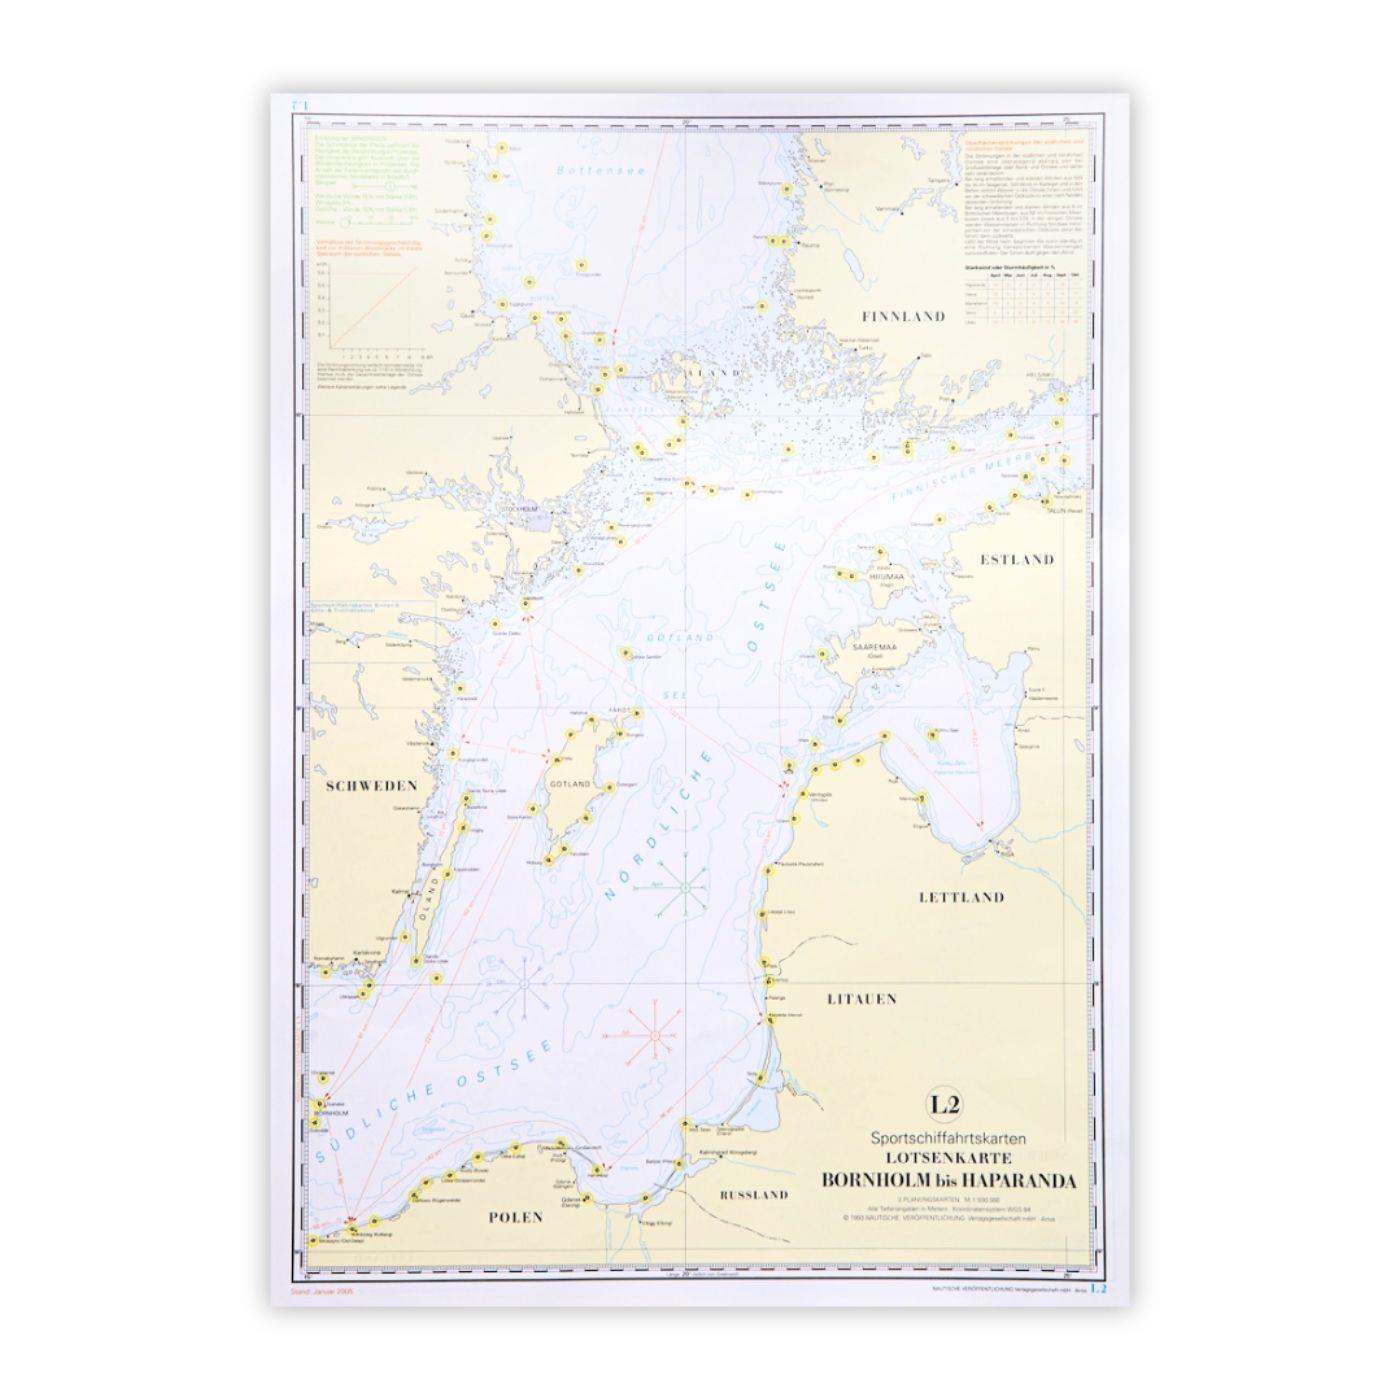 NV Lotsenkarte 2 - Bornholm - Haparanda